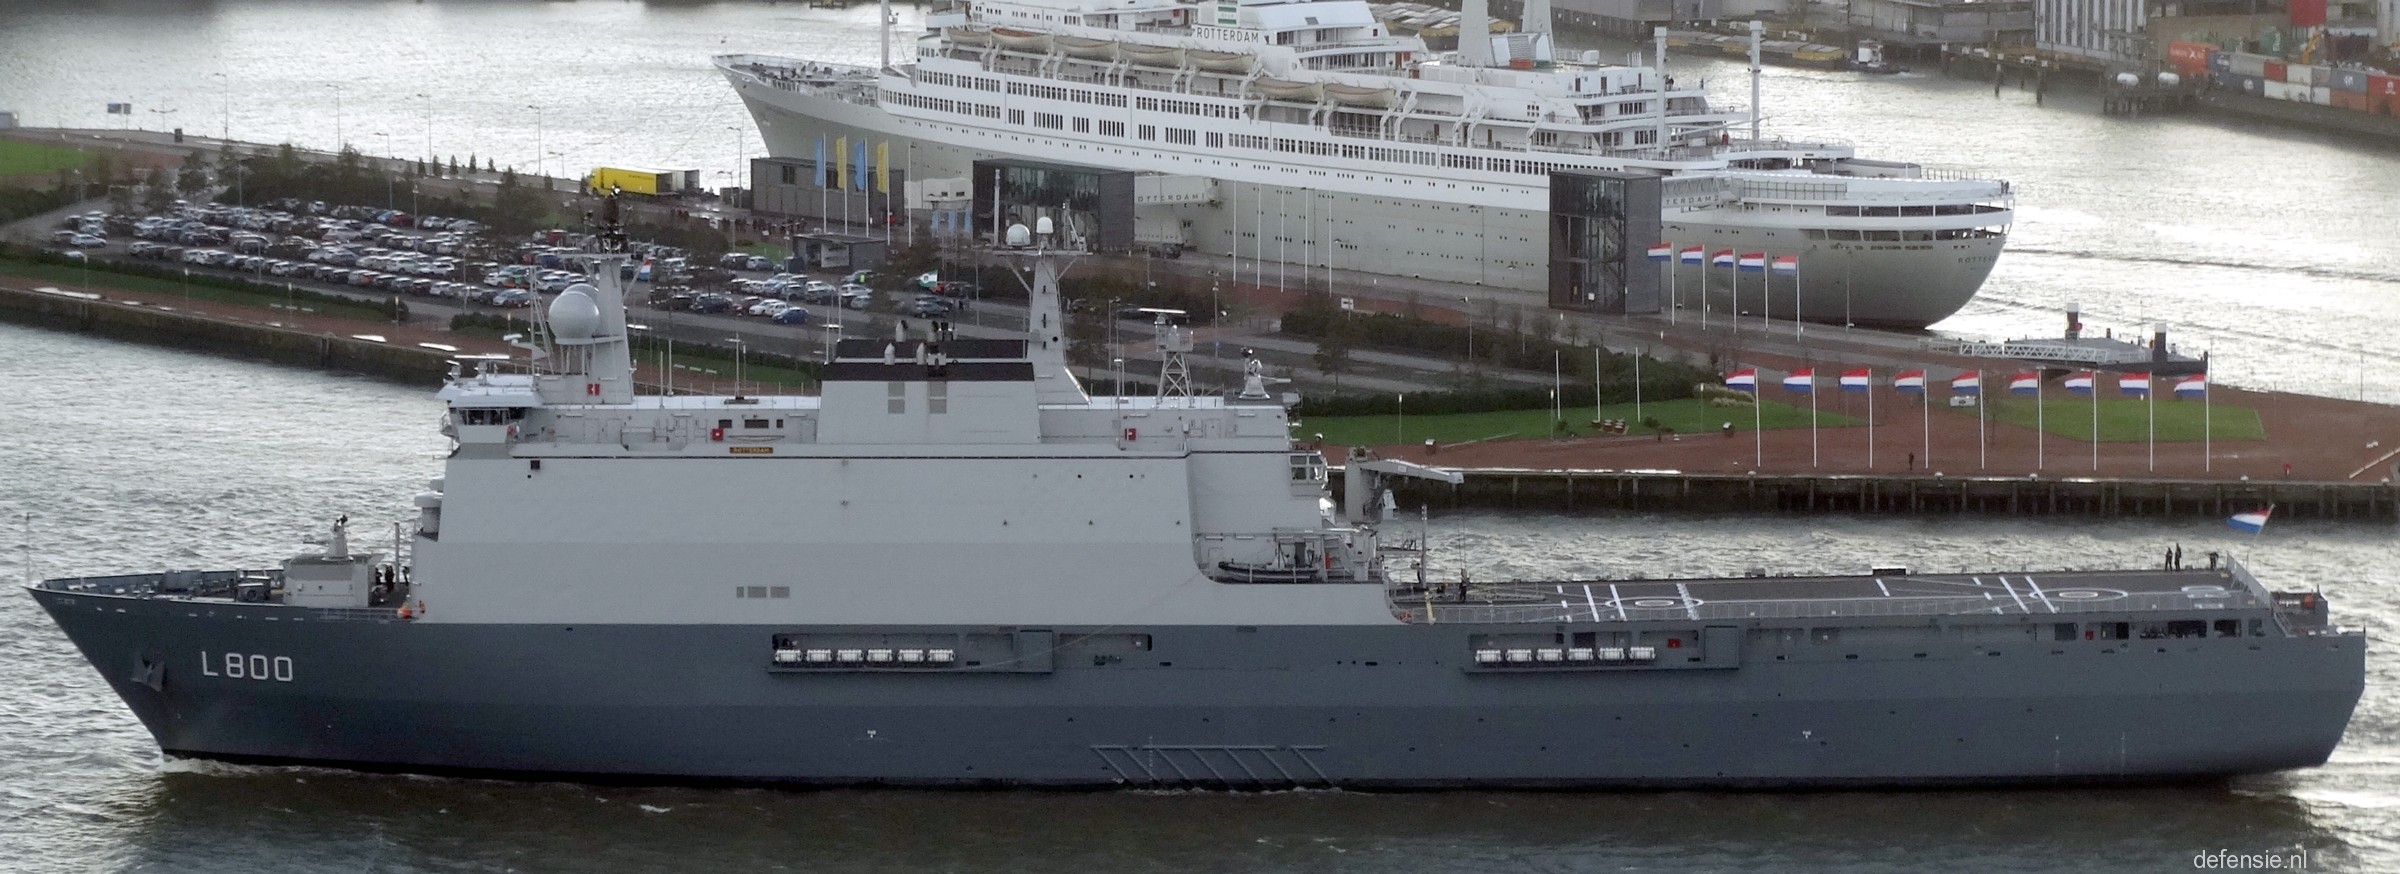 l-800 hnlms rotterdam amphibious landing ship dock lpd royal netherlands navy 21